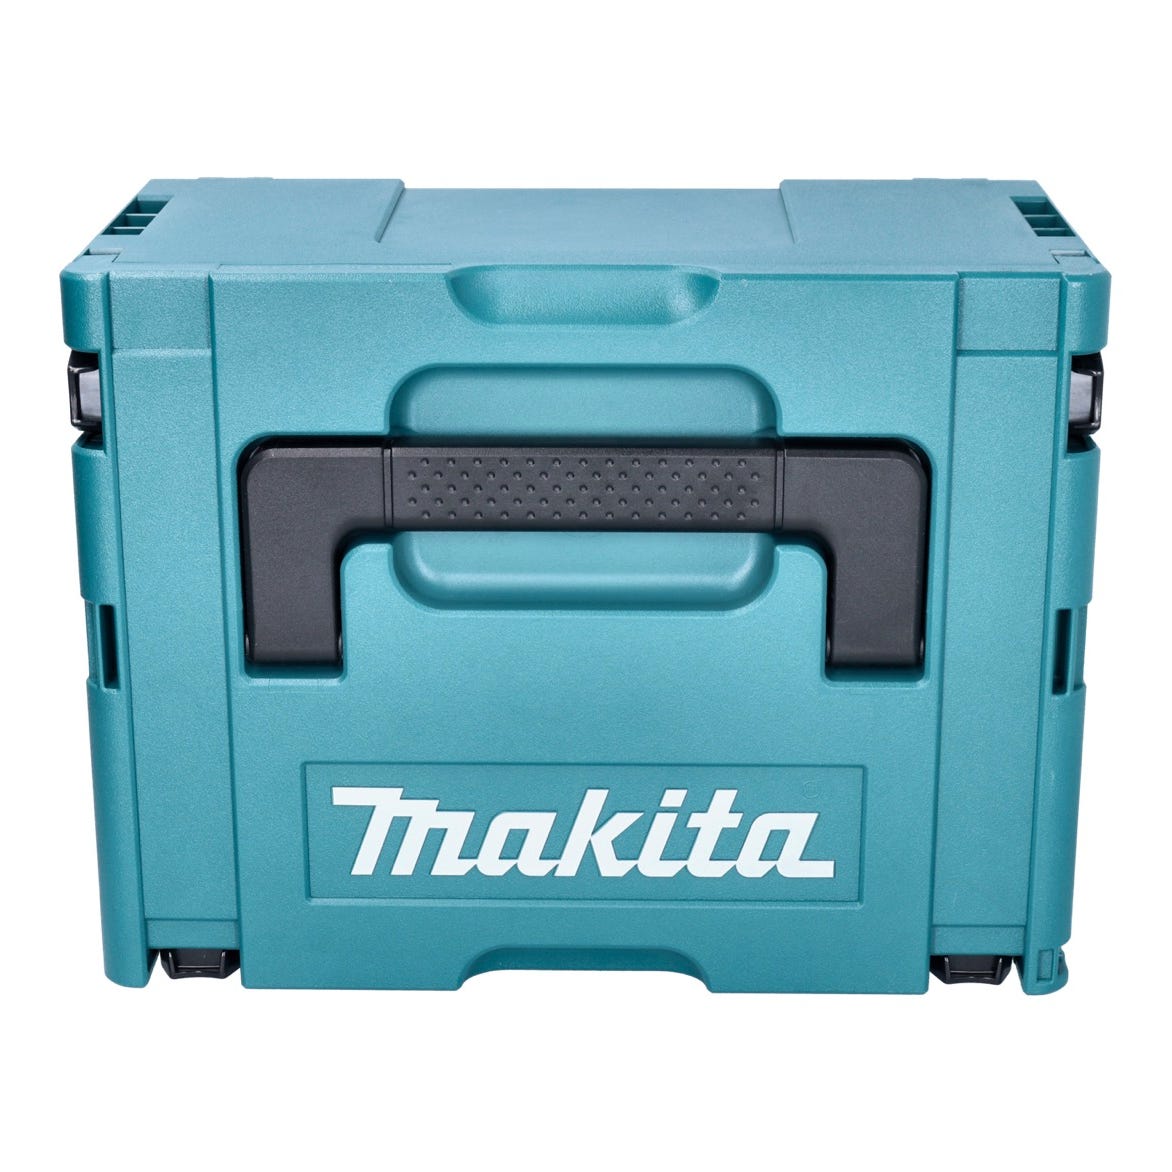 Makita DJV185RG1J Scie sauteuse sans fil 18V Brushless + 1x Batterie 6,0Ah + Chargeur + Coffret Makpac 2